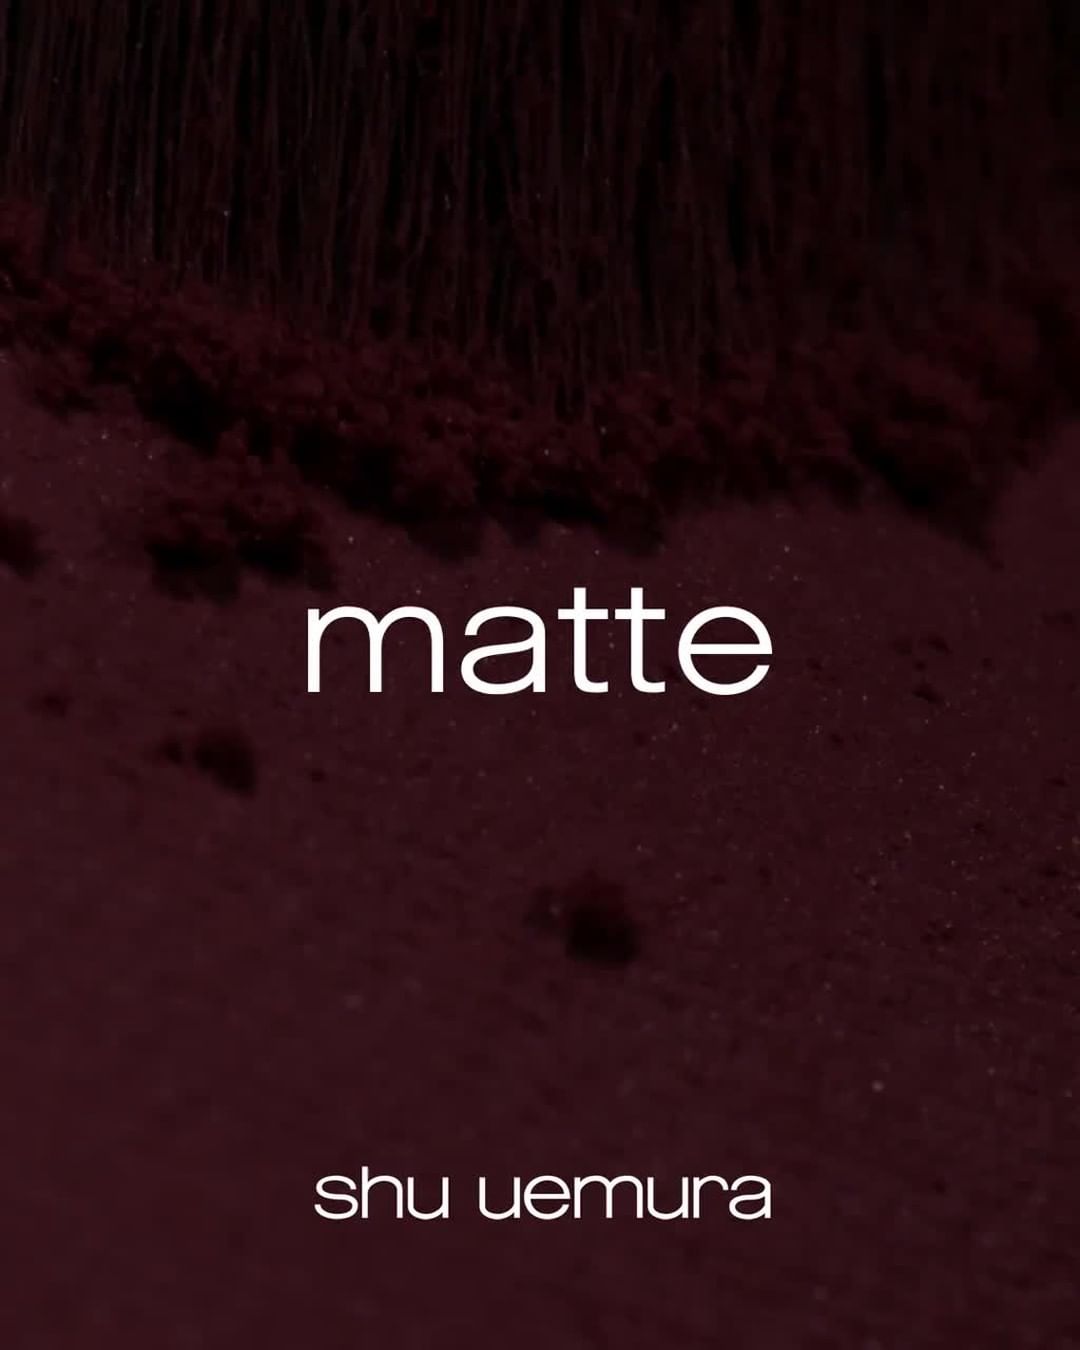 shu uemura - matte texture is a buttery, smooth pressed eye shadow formula for intense color payoff. #shuuemura #shuartistry #pressedeyeshadow #matteeyeshadow⁠